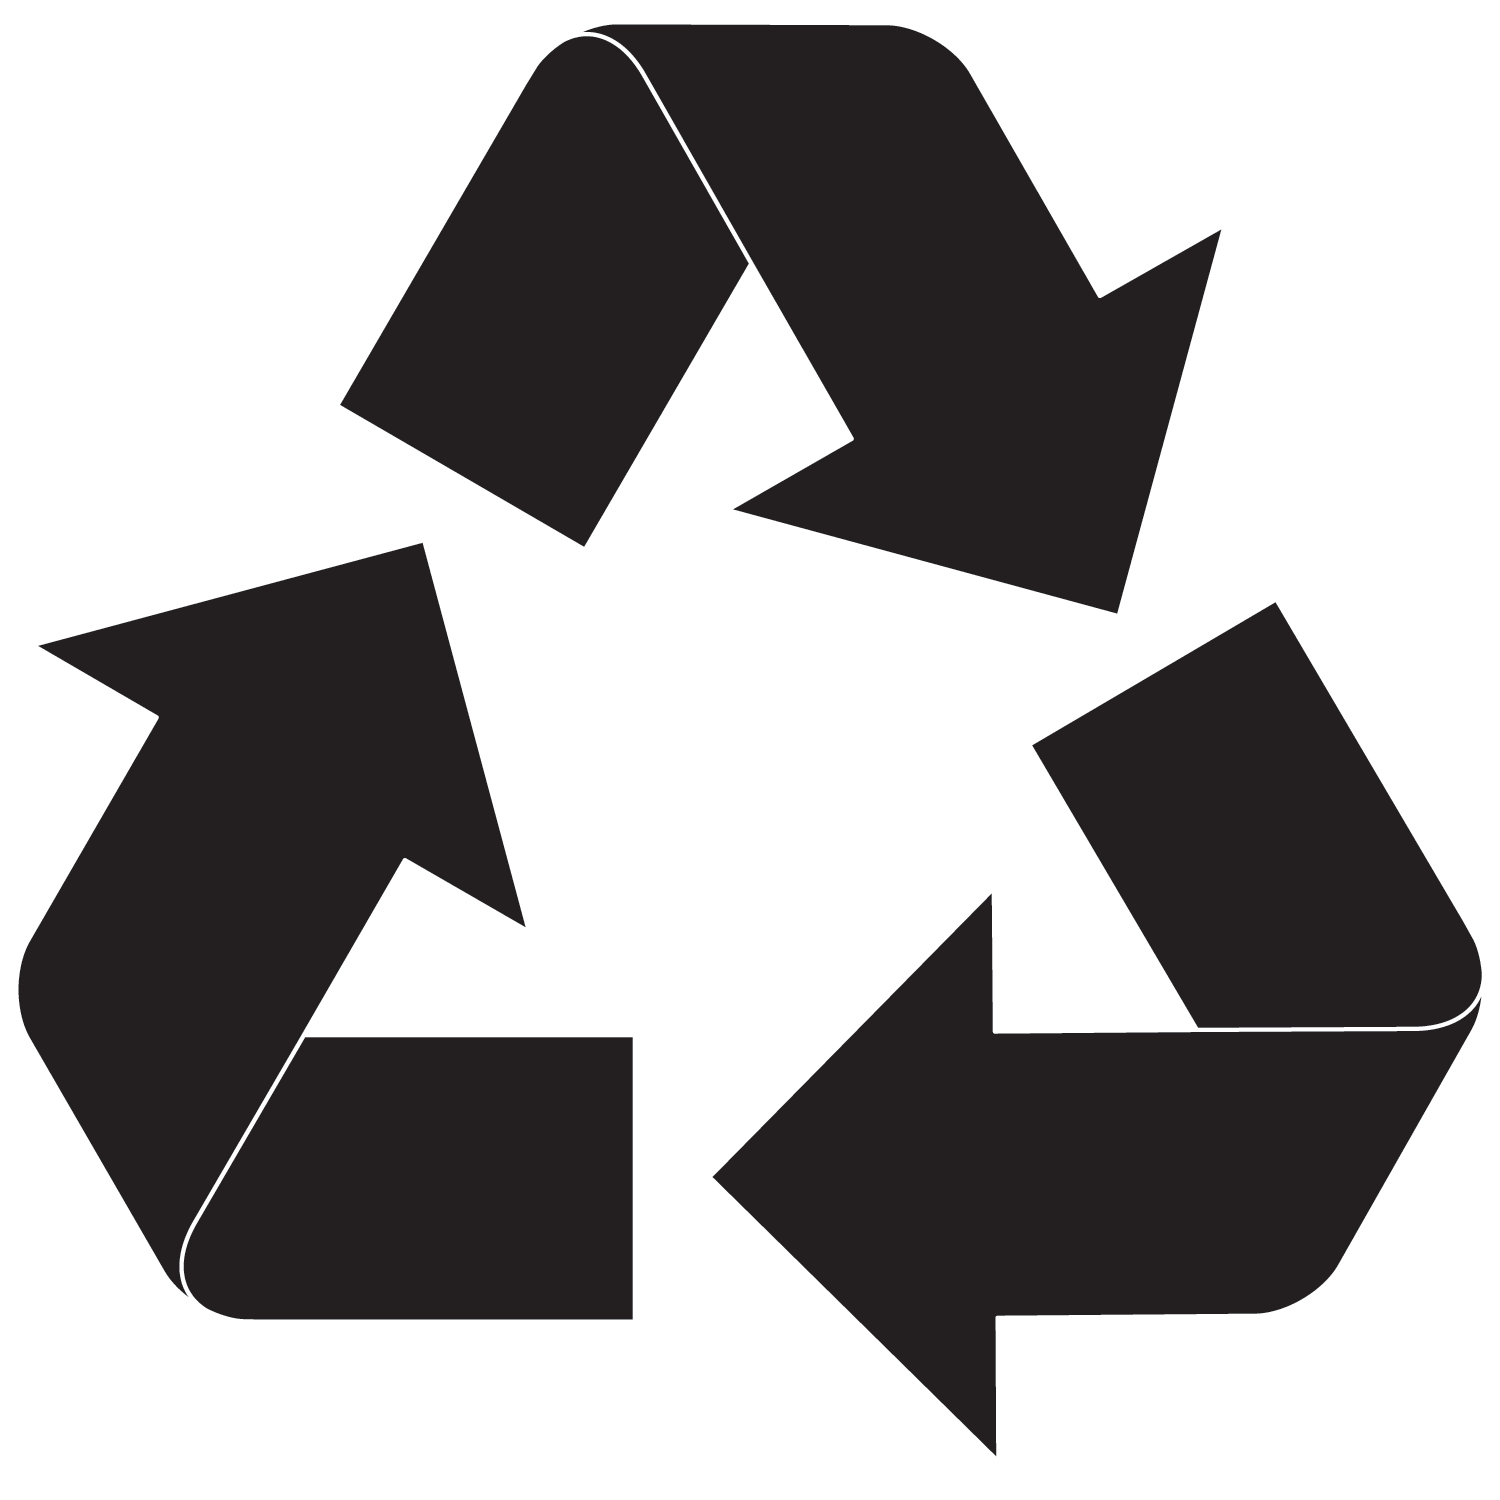 printable-recycle-symbol